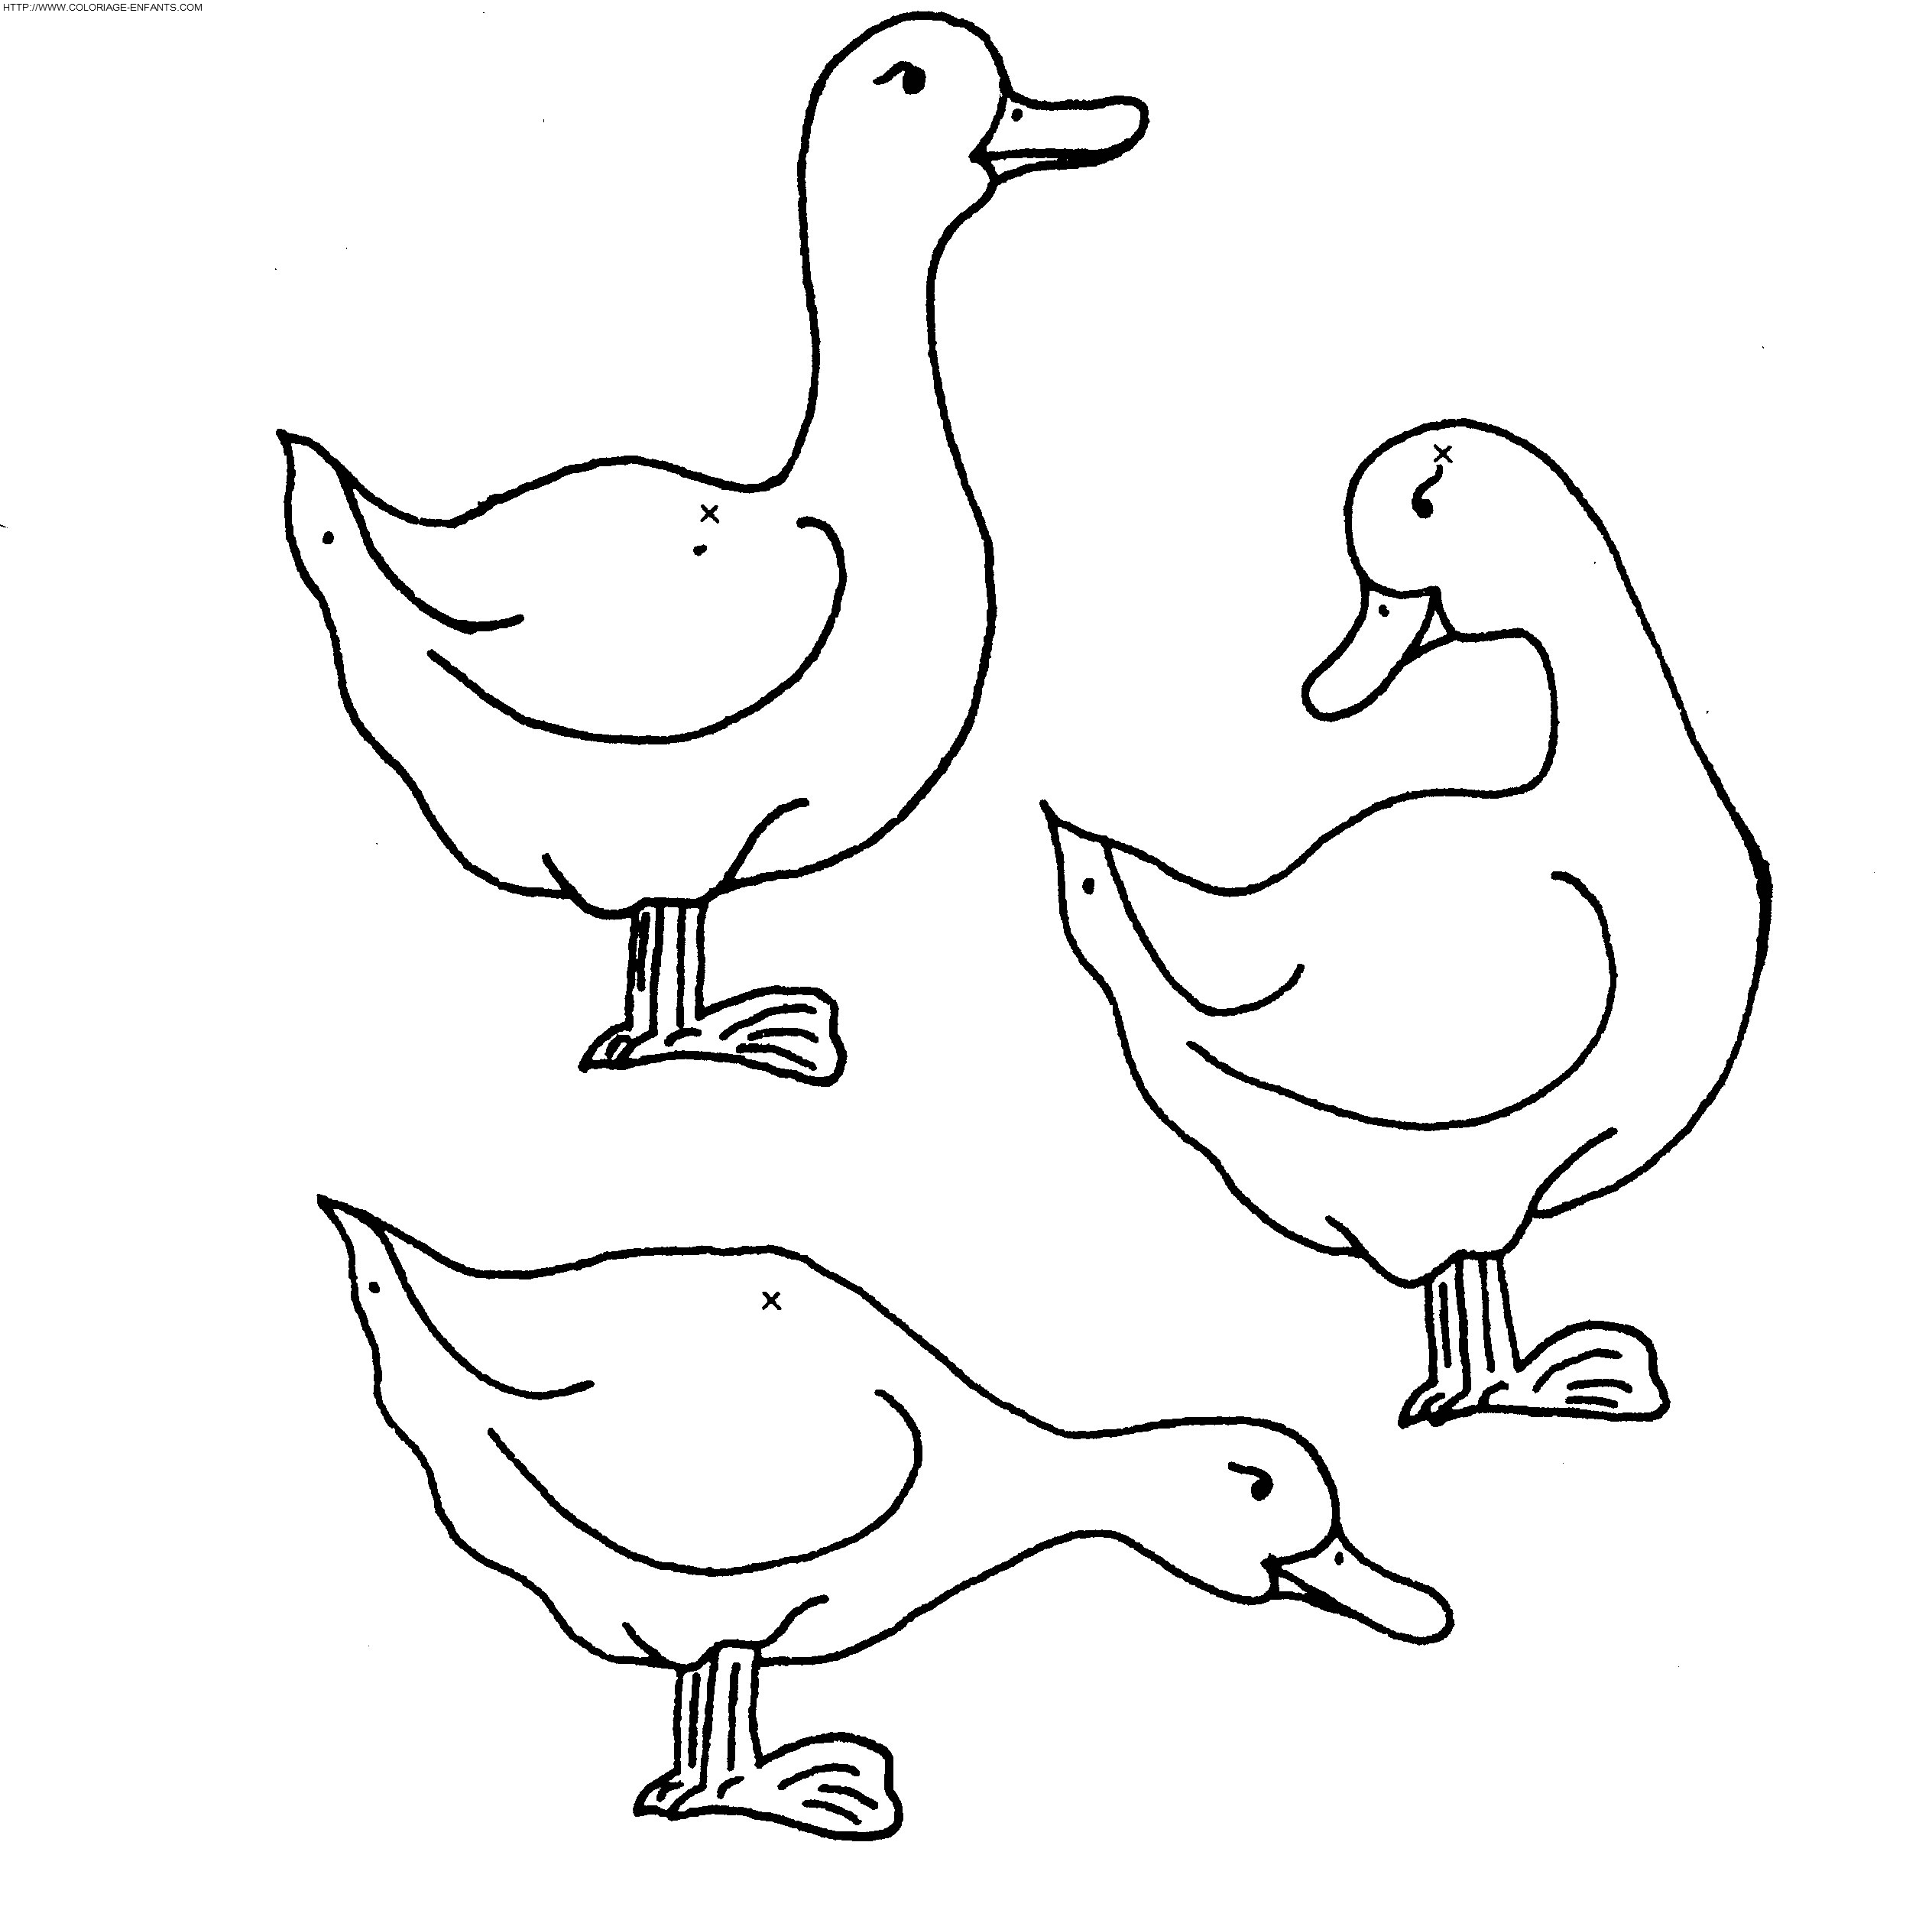 Ducks coloring